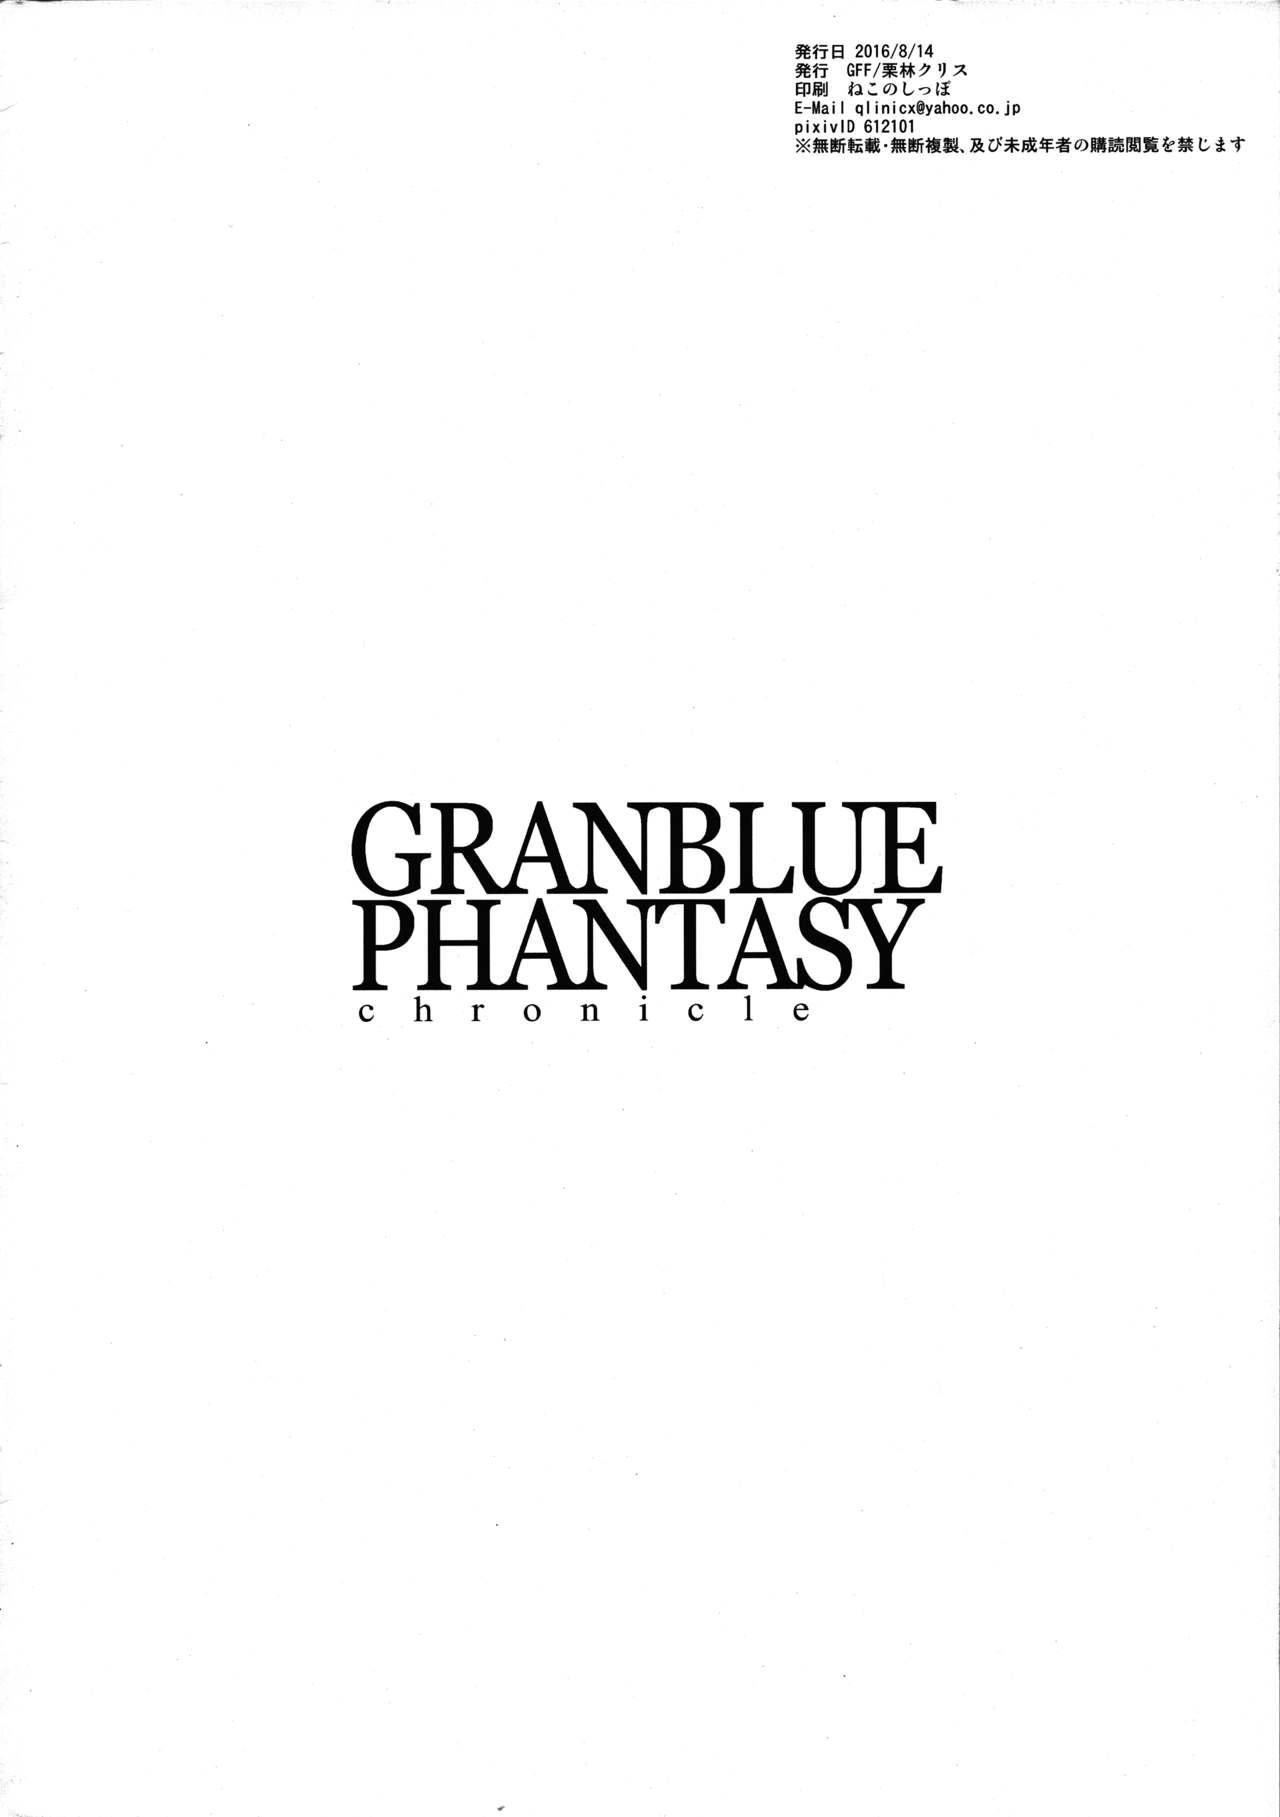 GRANBLUE PHANTASY chronicle Vol. 01 7